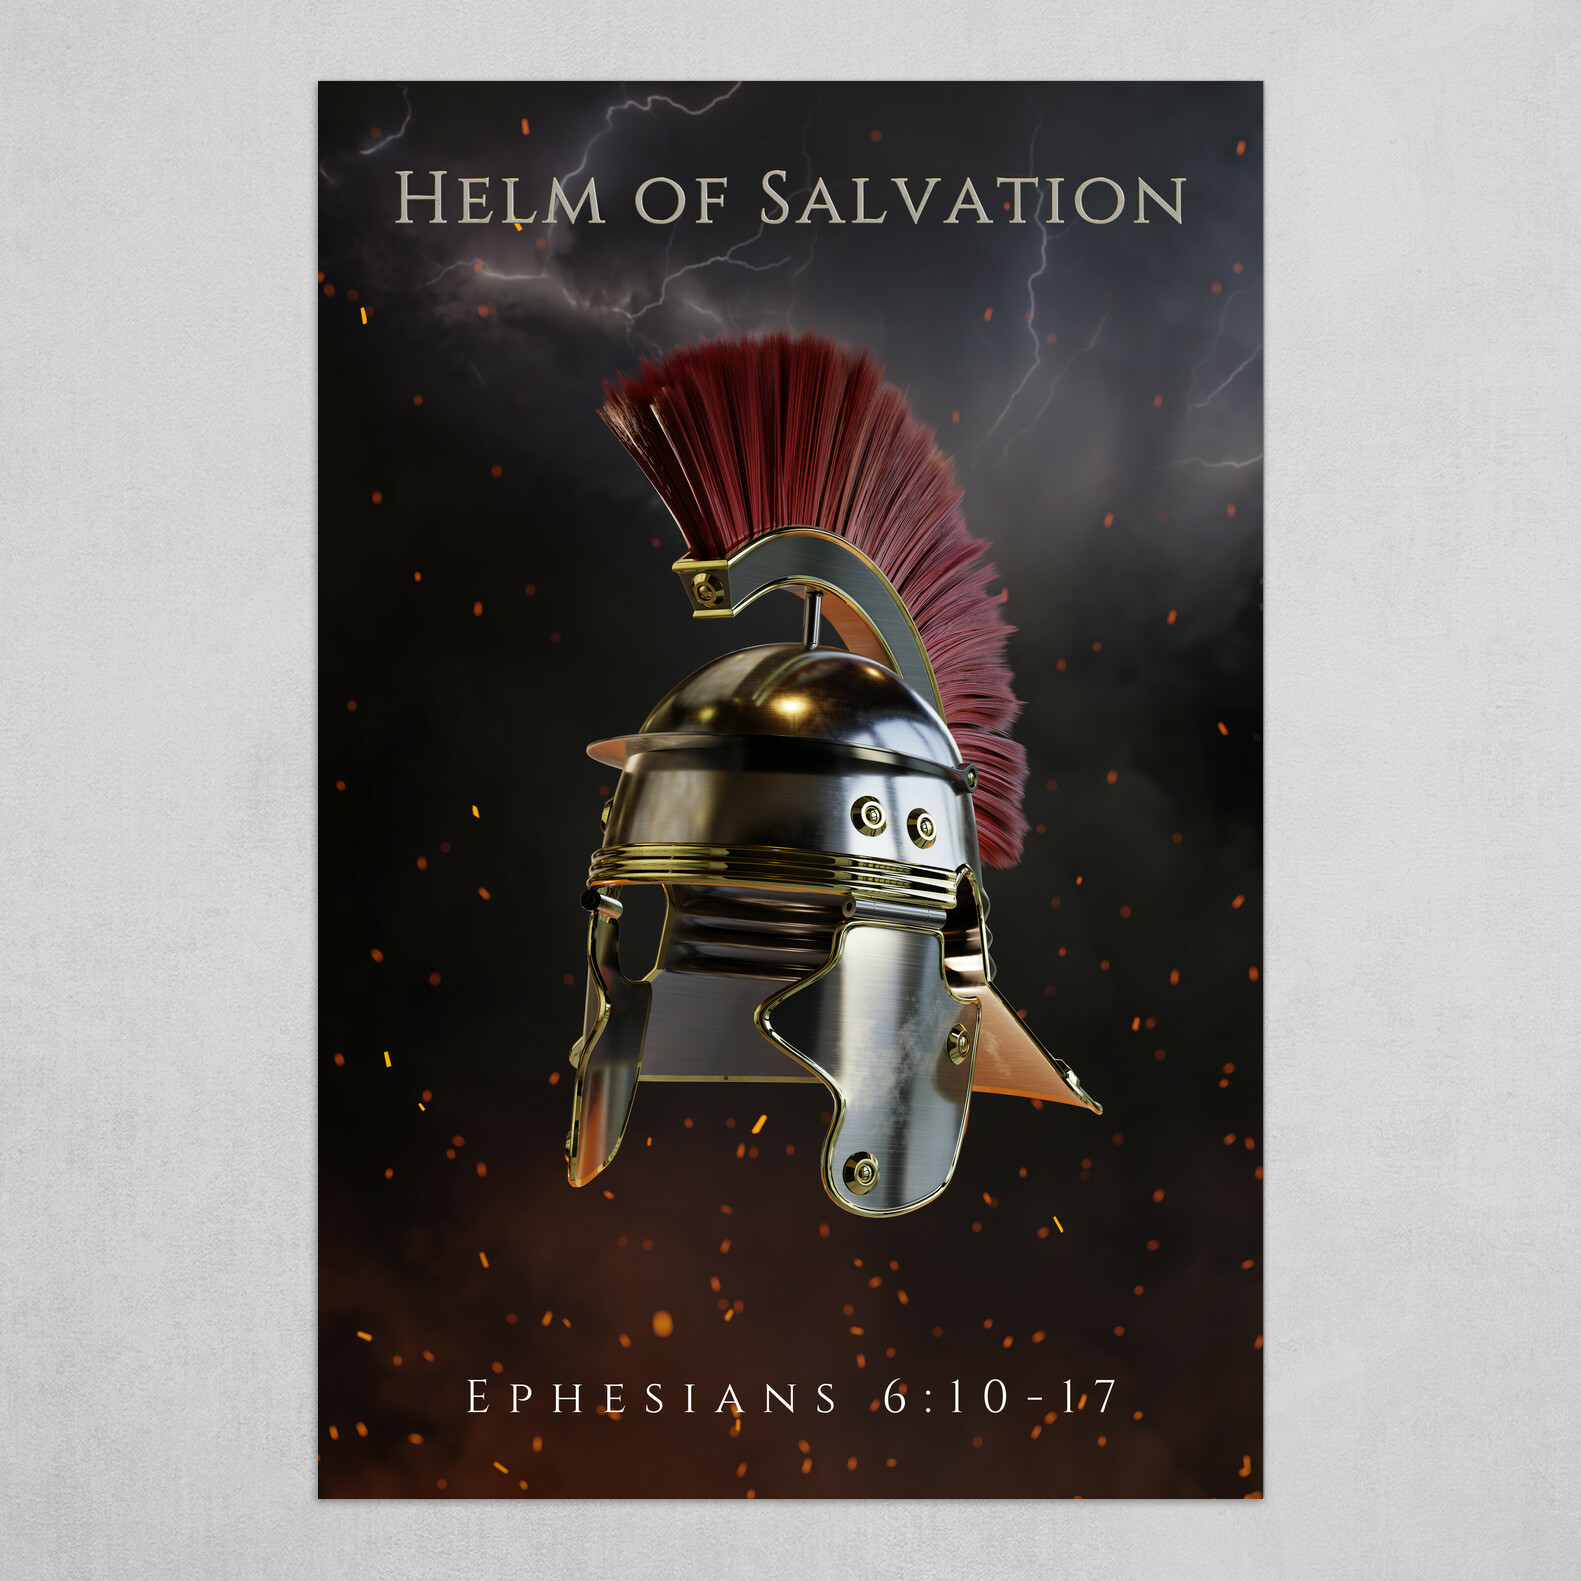 Helm of Salvation